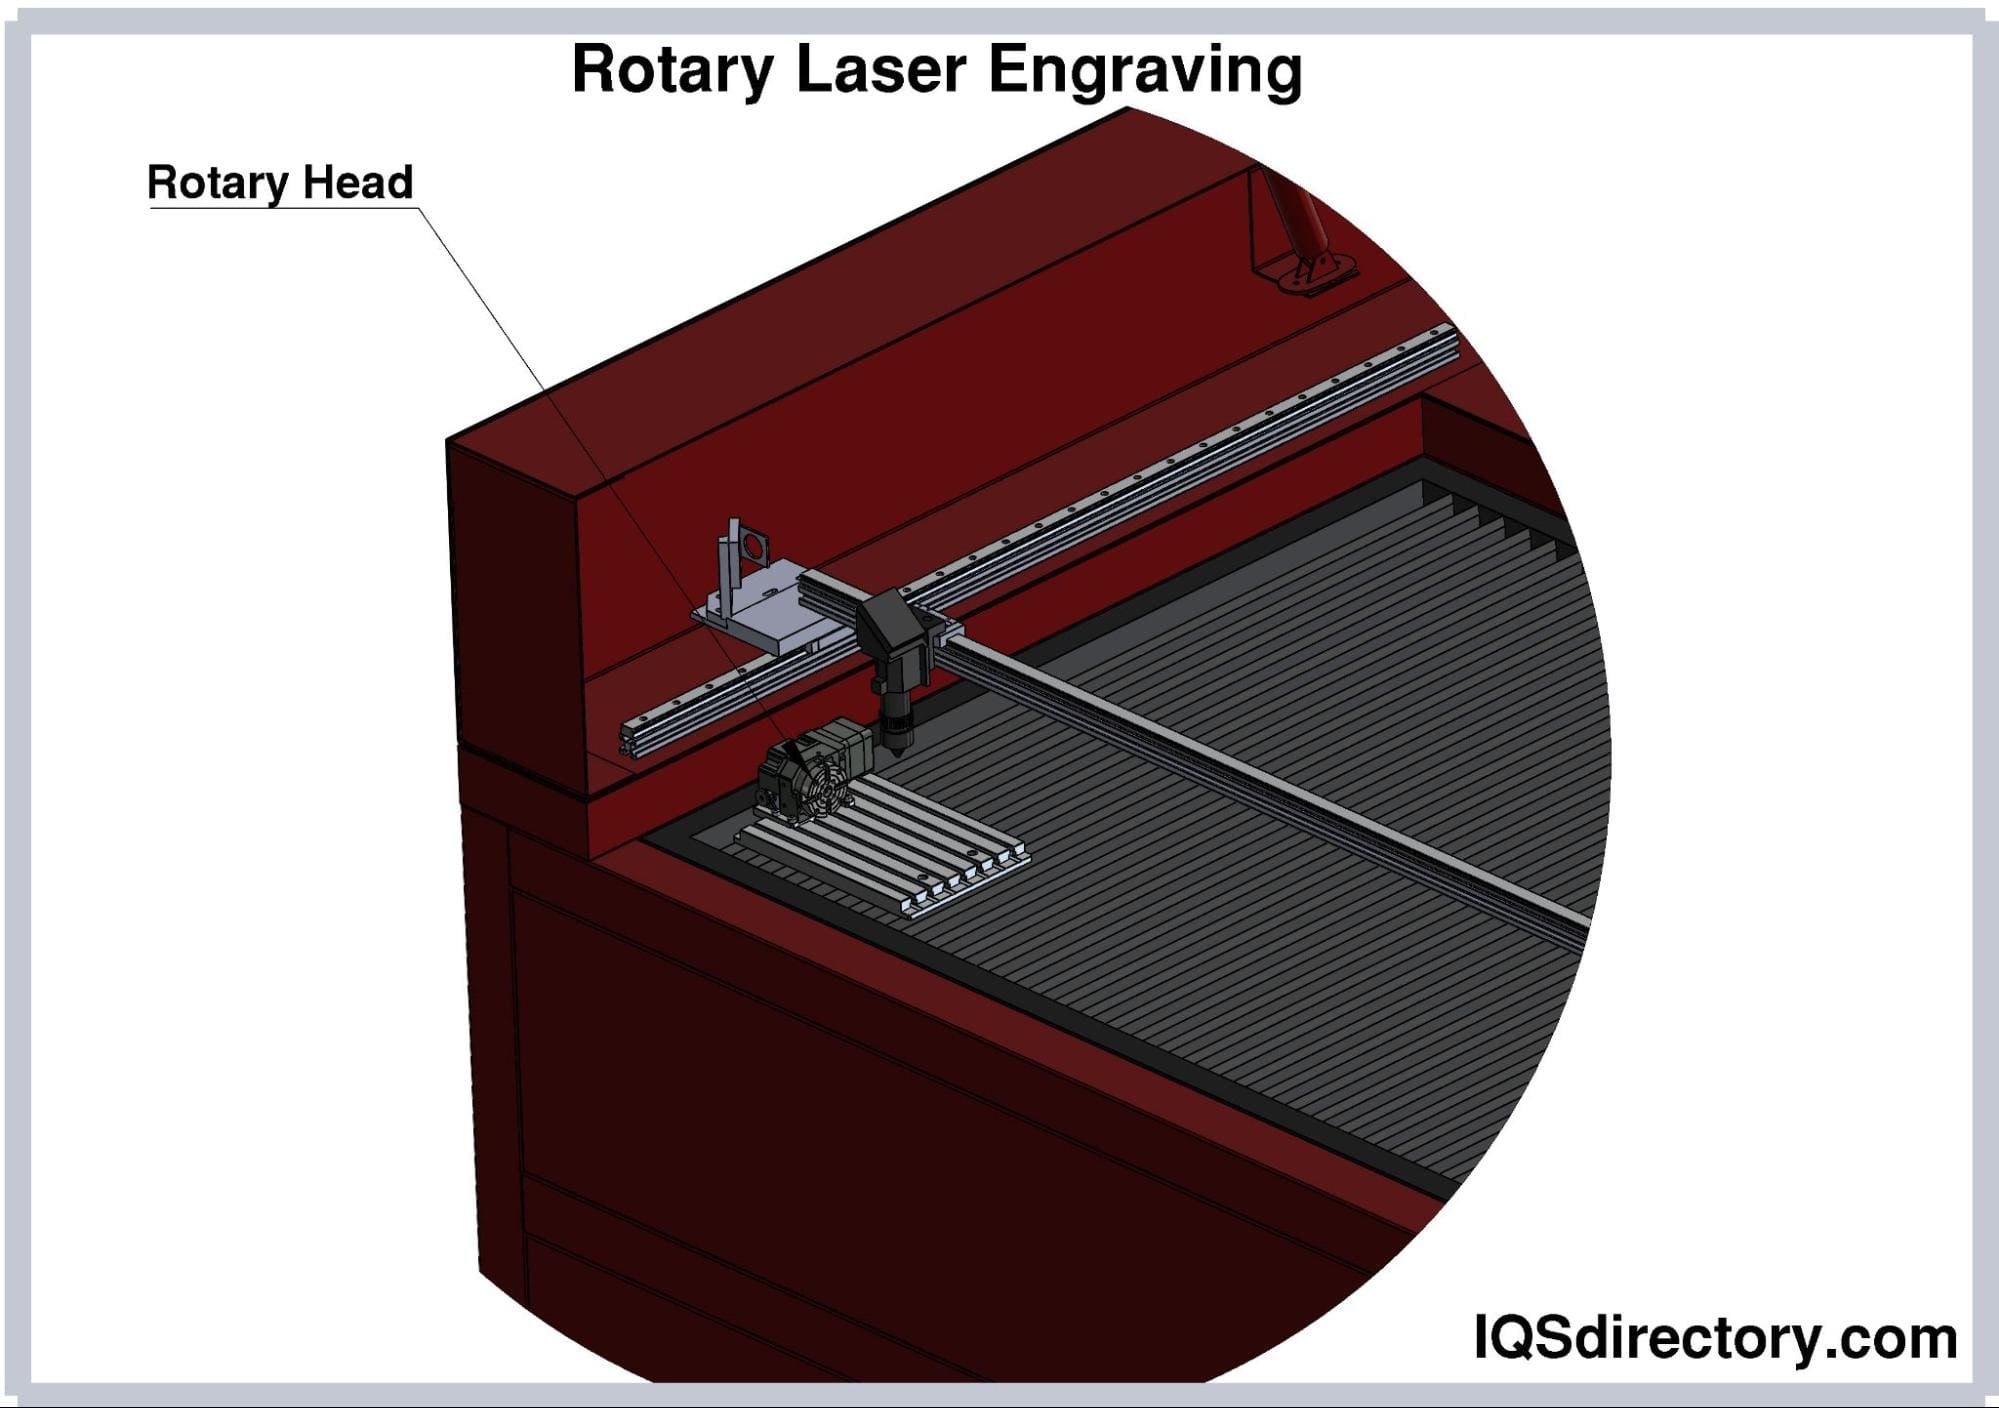 Rotary Laser Engraving